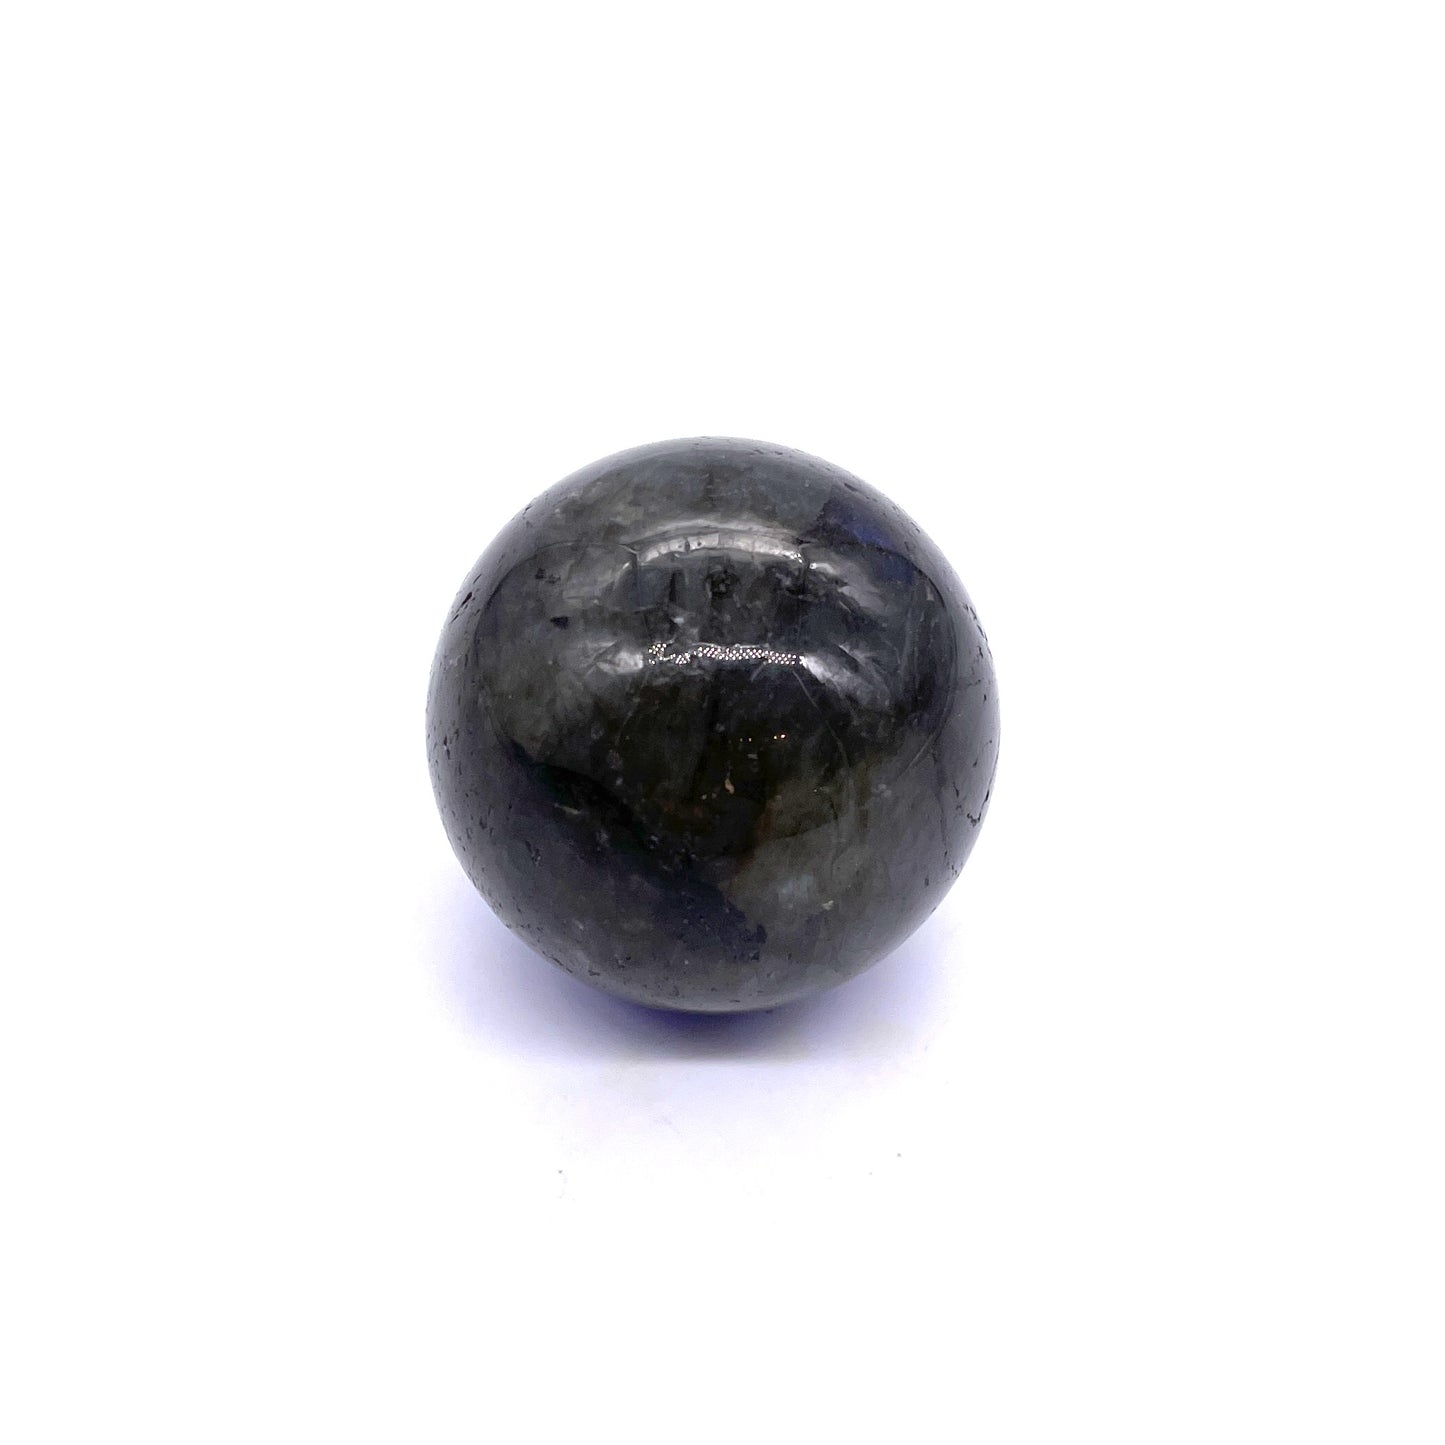 Small spherical labradorite stone--flashy blue and grey iridescent crystal.